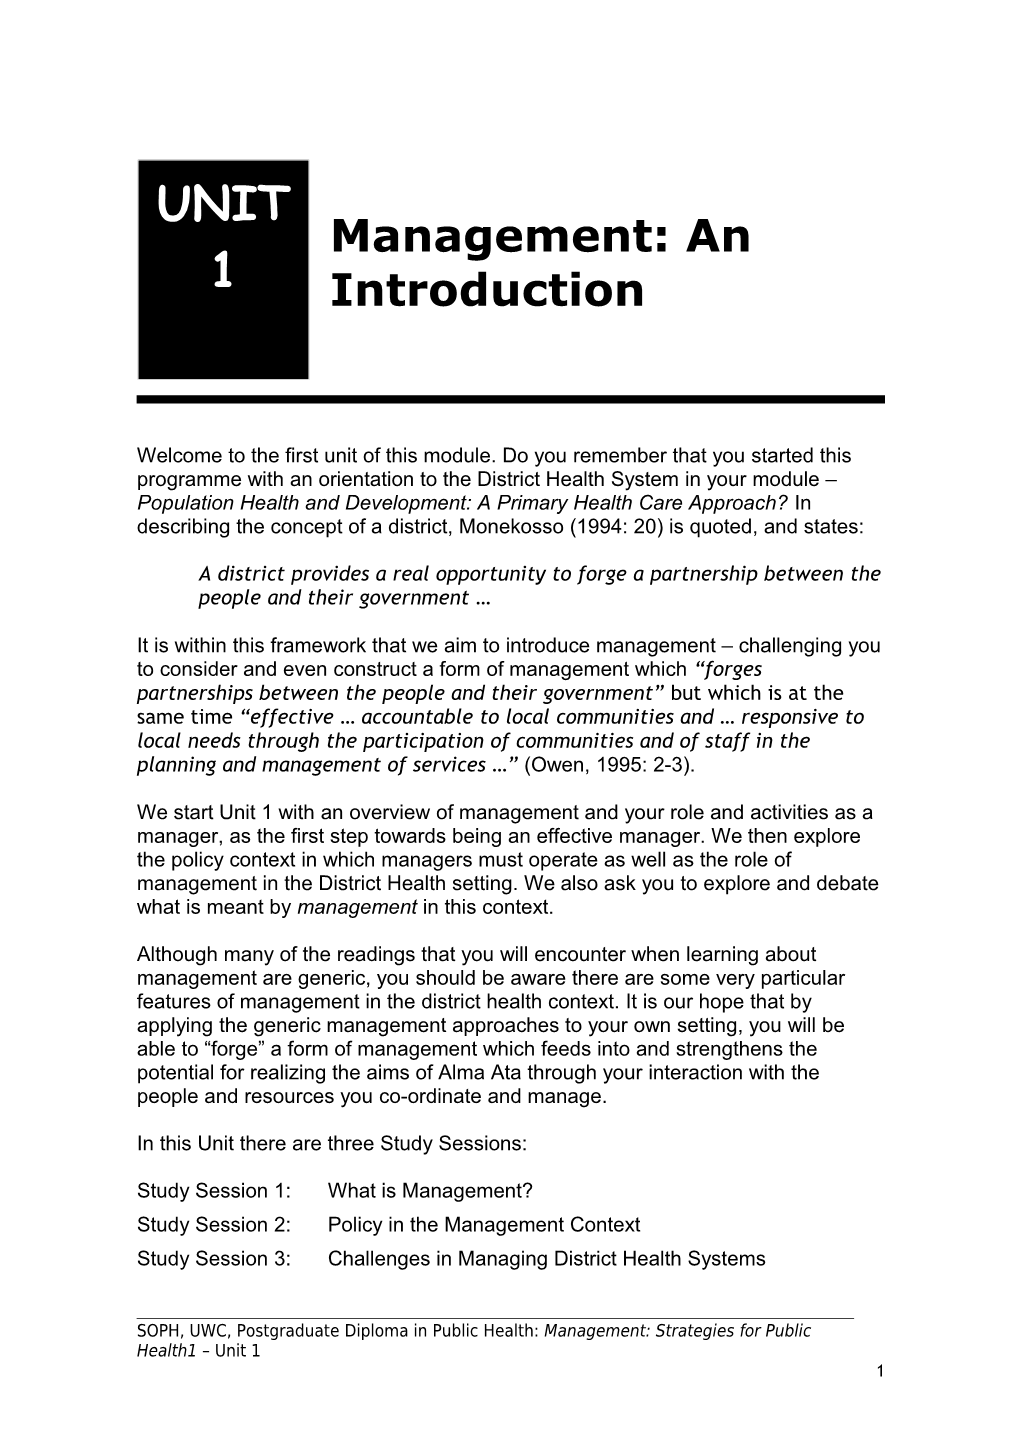 Management: an Introduction